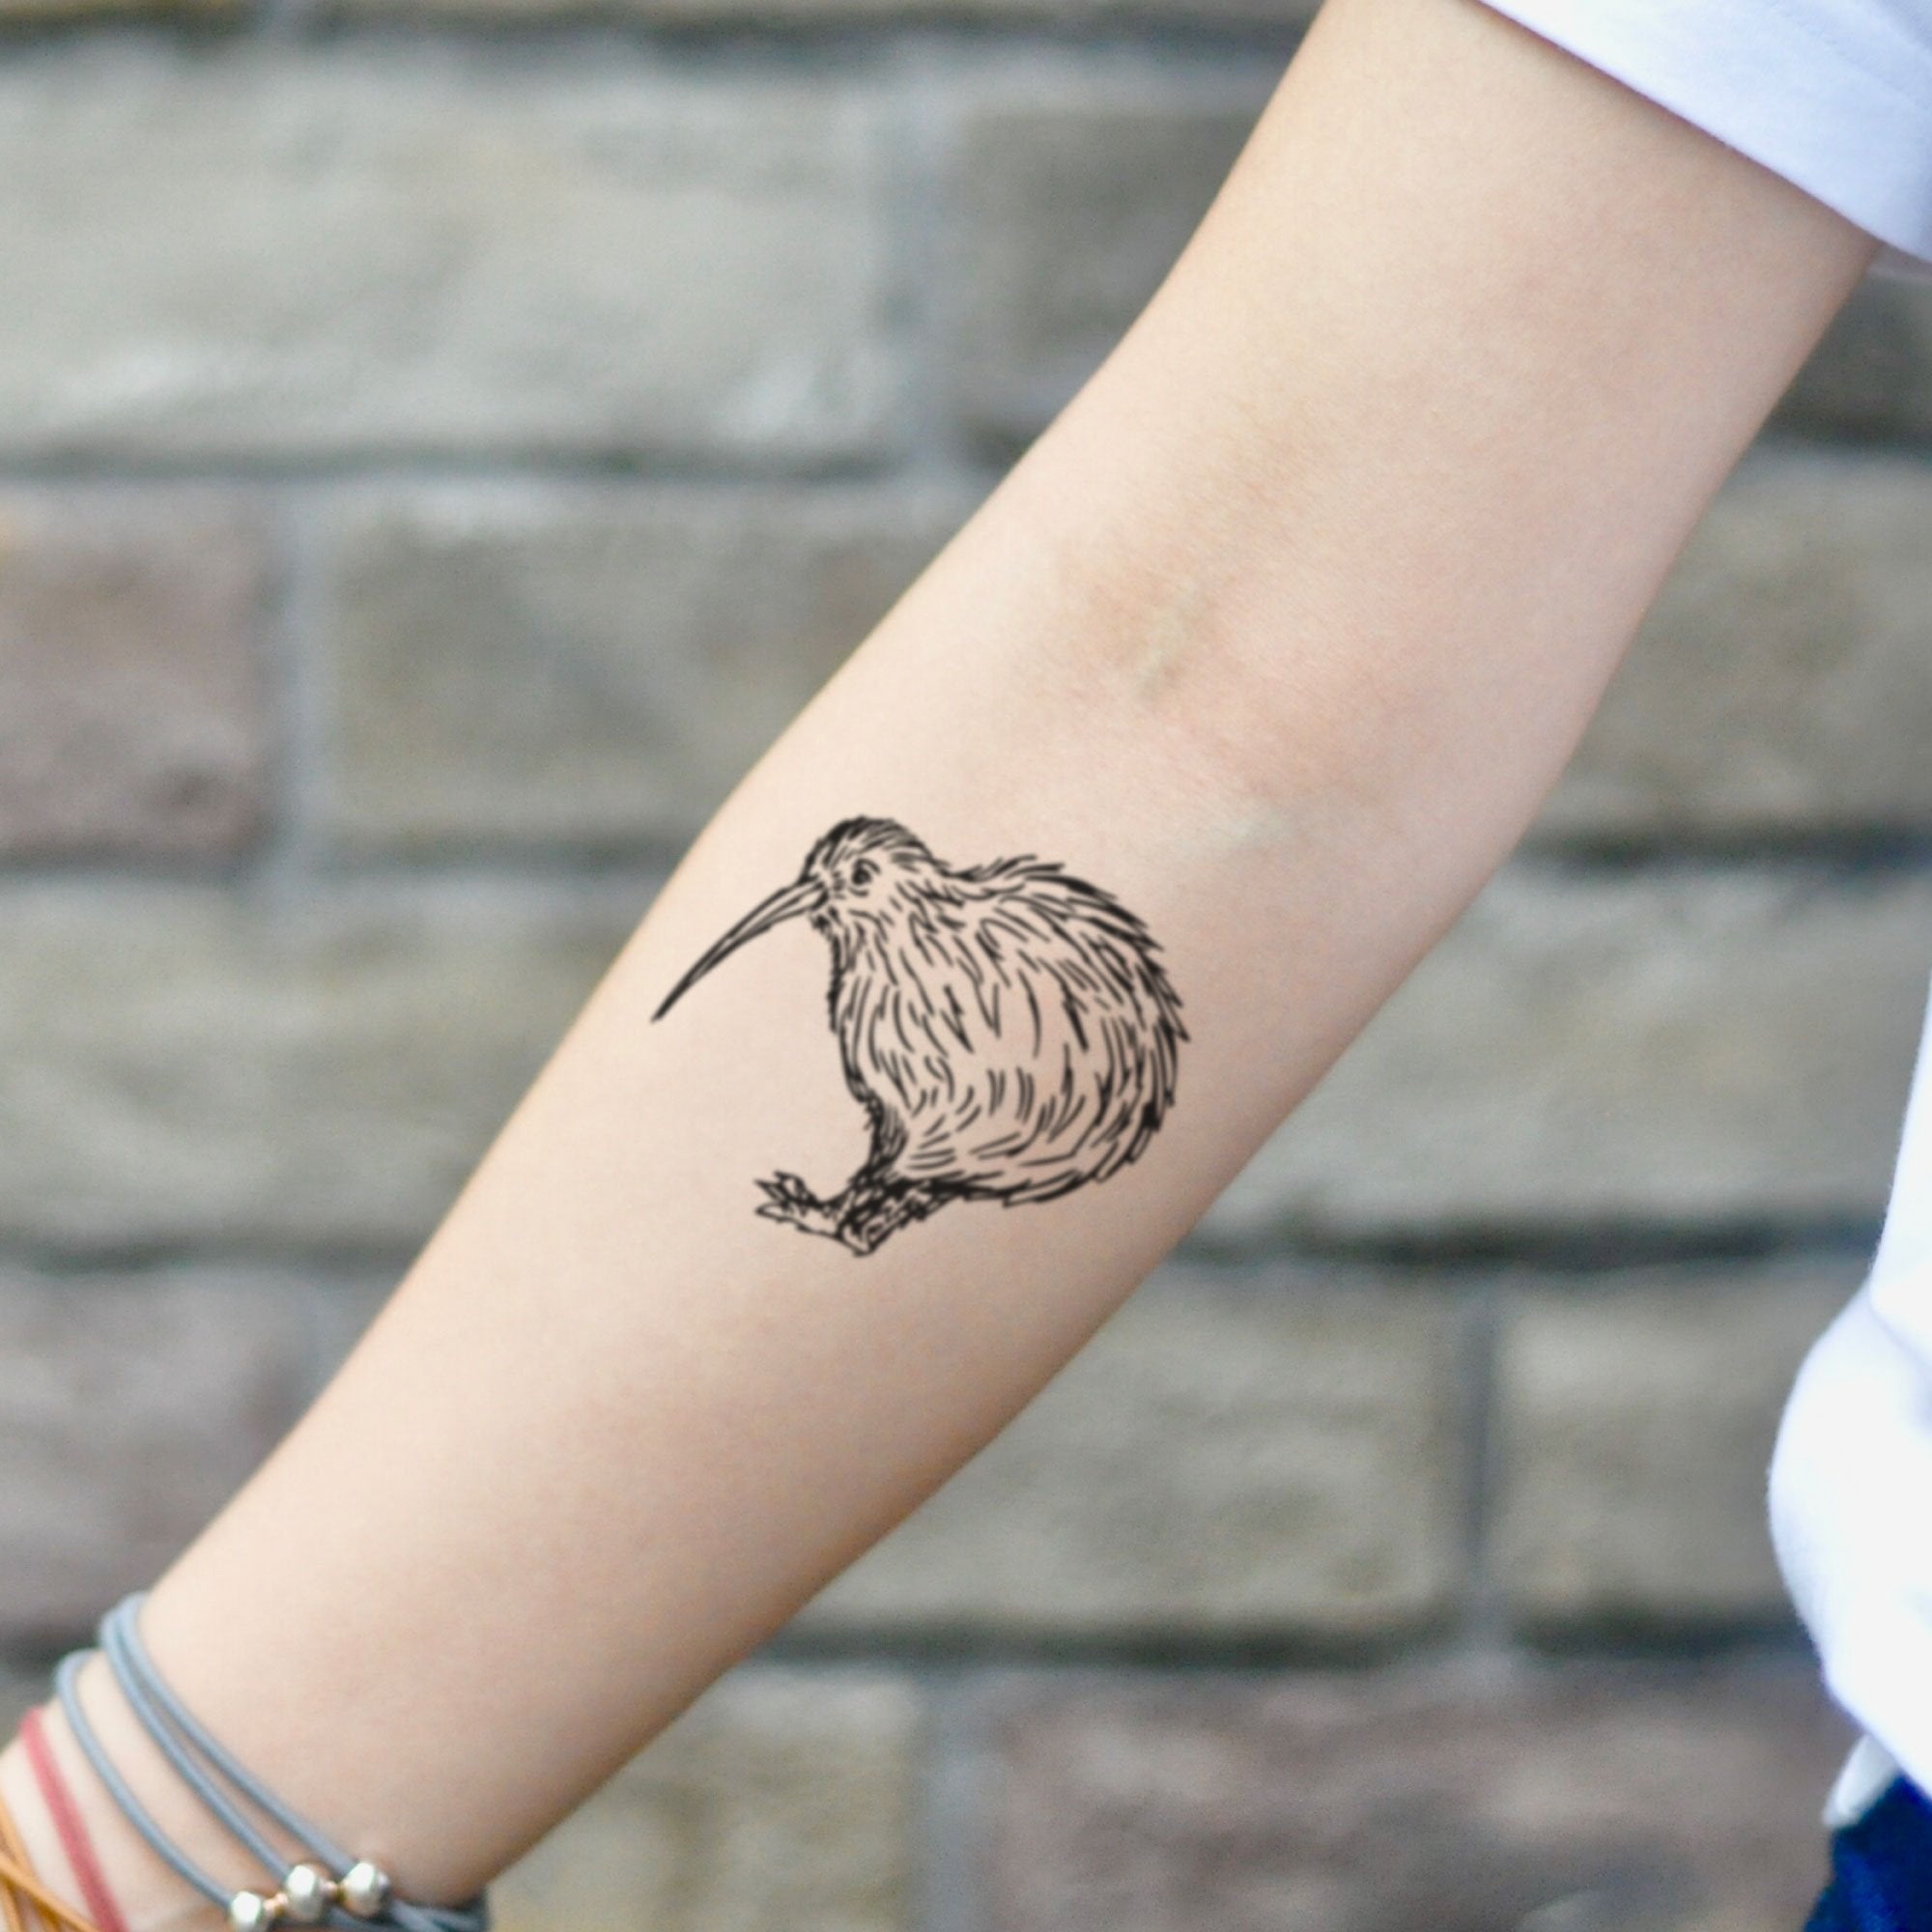 Bird tattoo - Visions Tattoo and Piercing